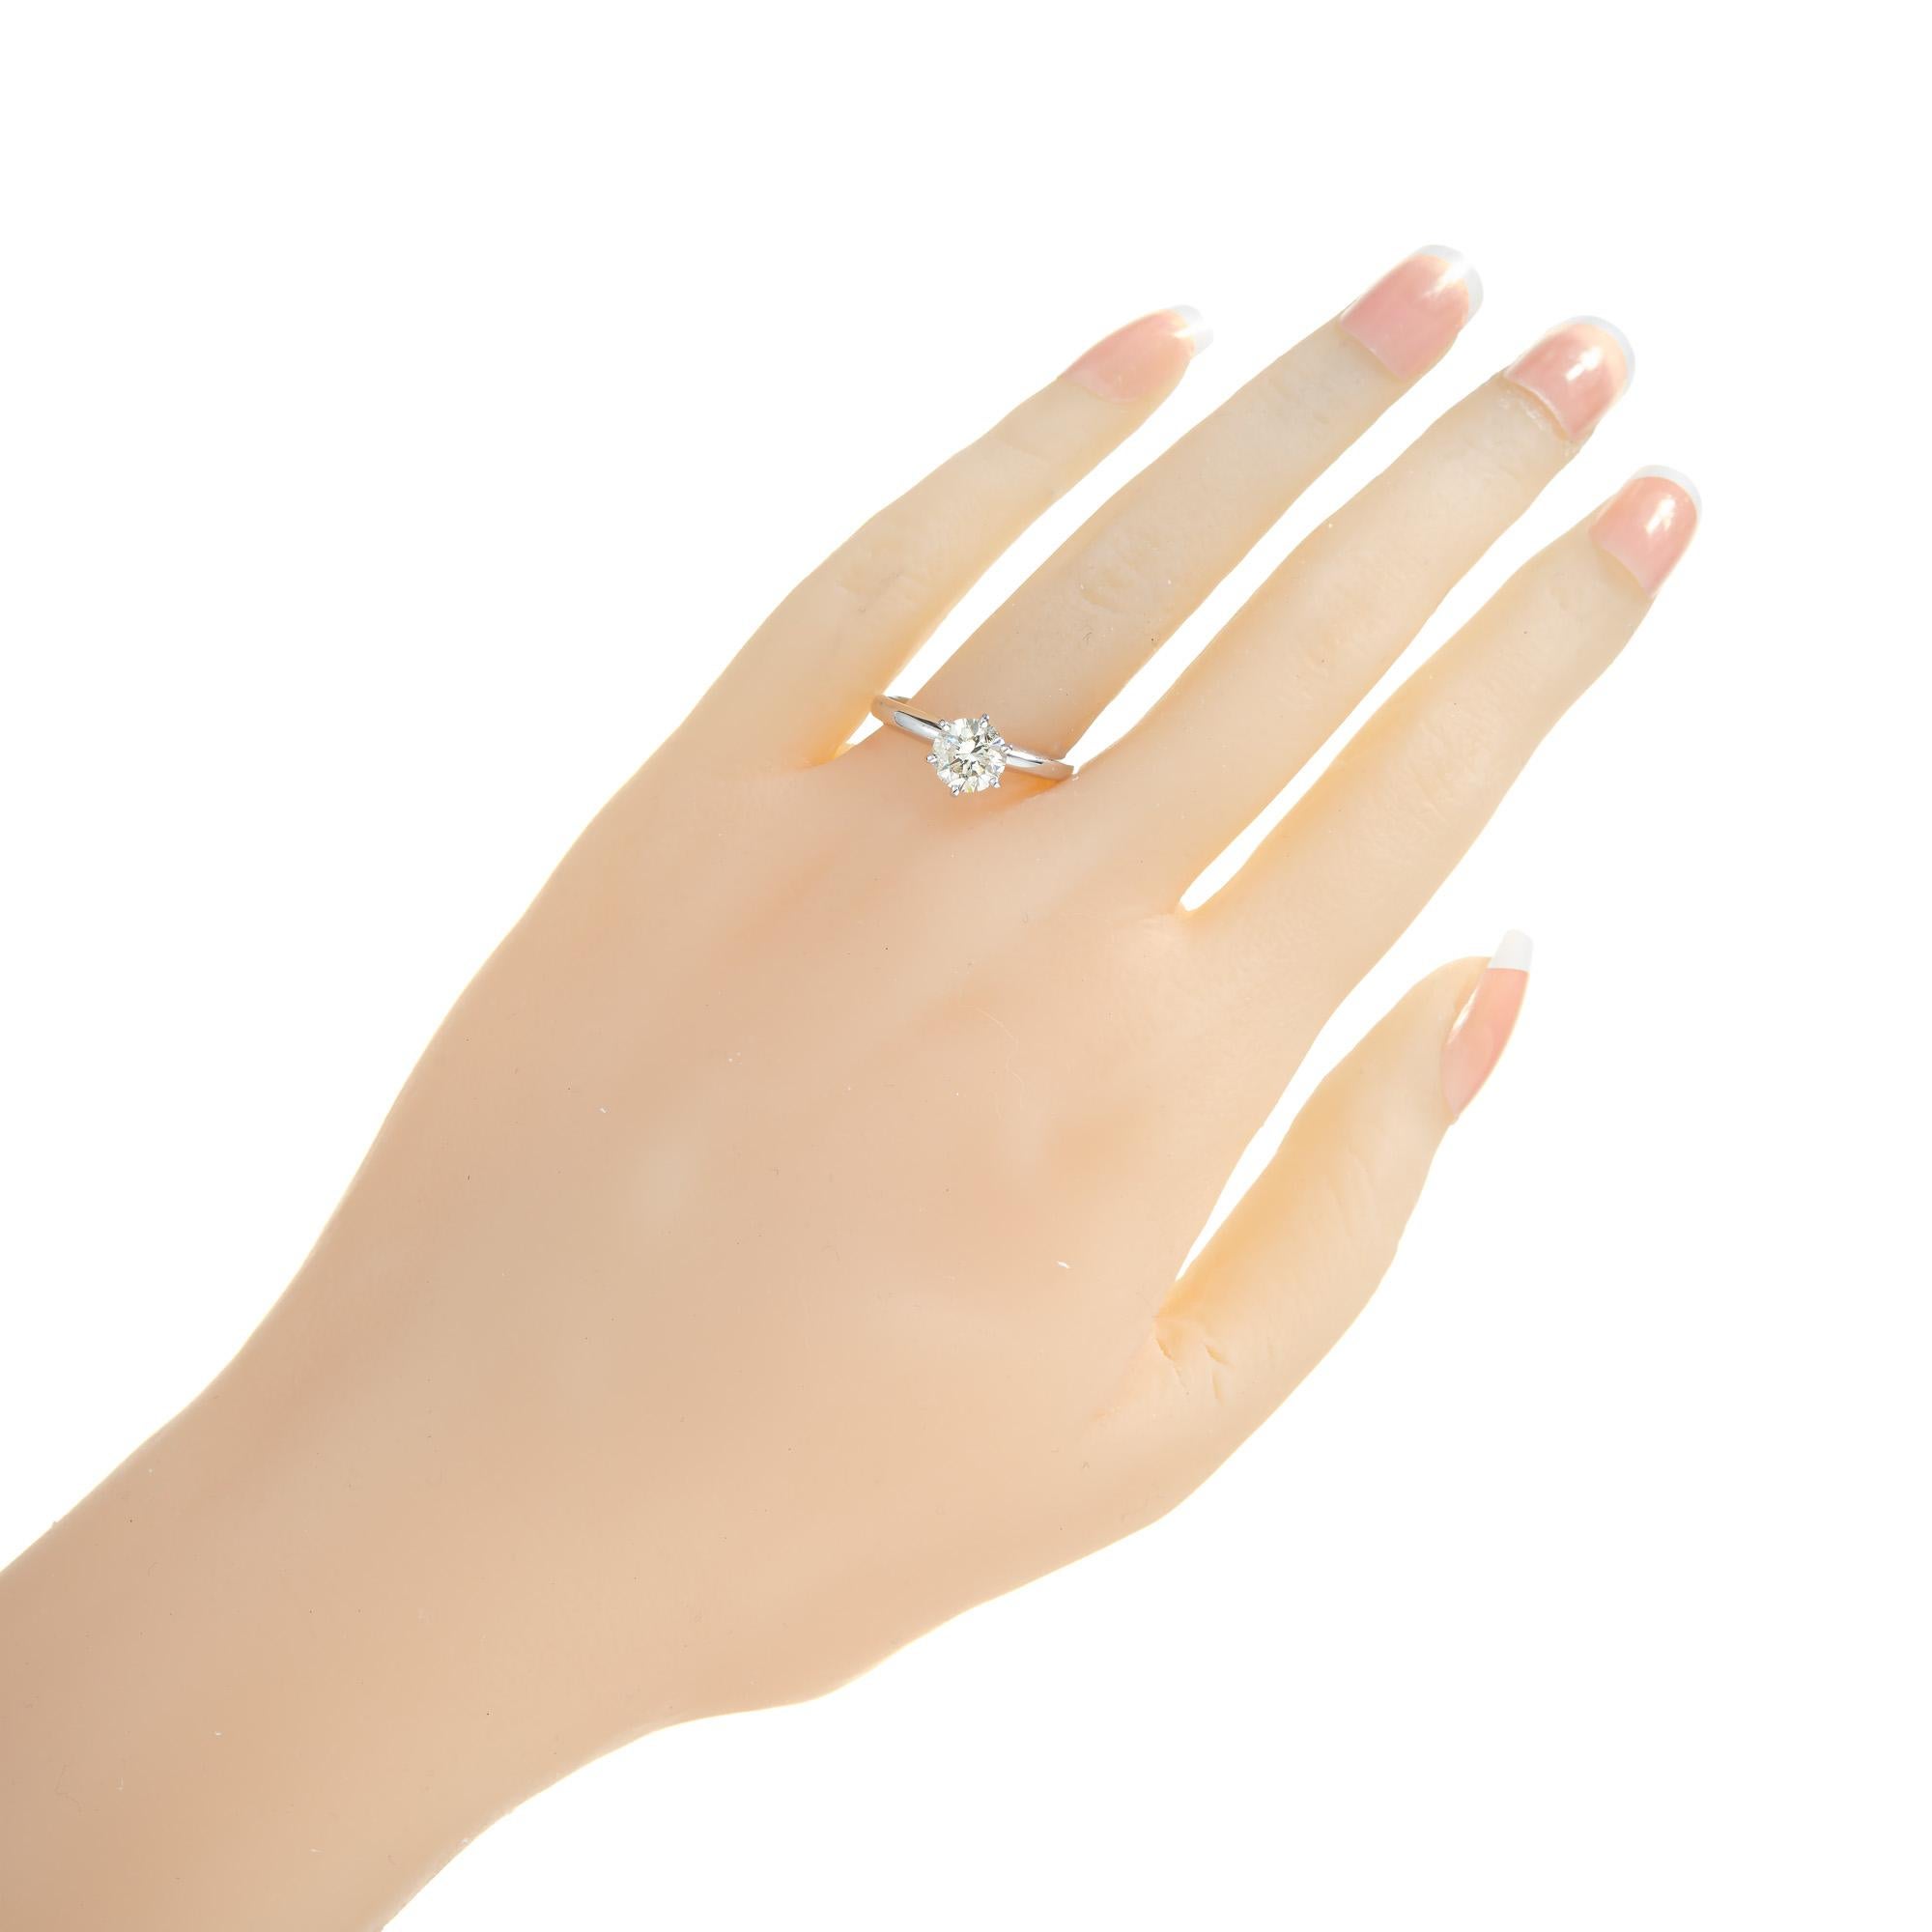 EGL Certified 1.10 Carat Round Diamond Platinum Solitaire Engagement Ring For Sale 3